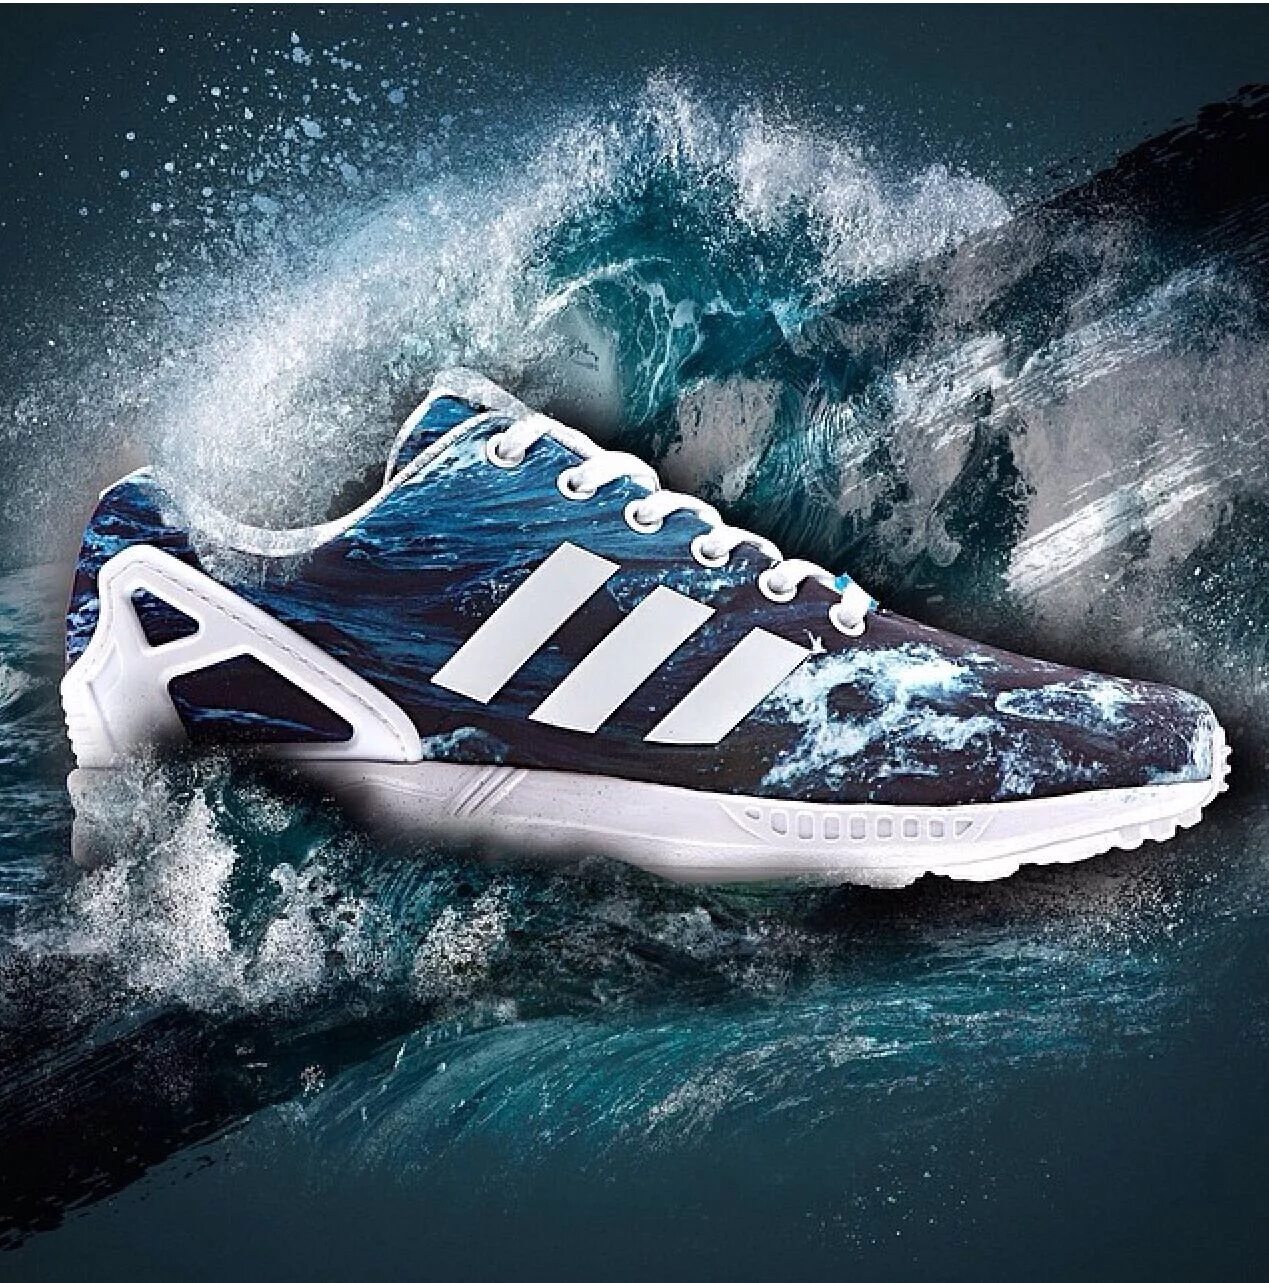 Adidas ZX Flux Ocean Wave. Кроссовки найк адидас. Adidas Flux Ocean. Найк адидас кроссовки адида. Самые популярные адидасы